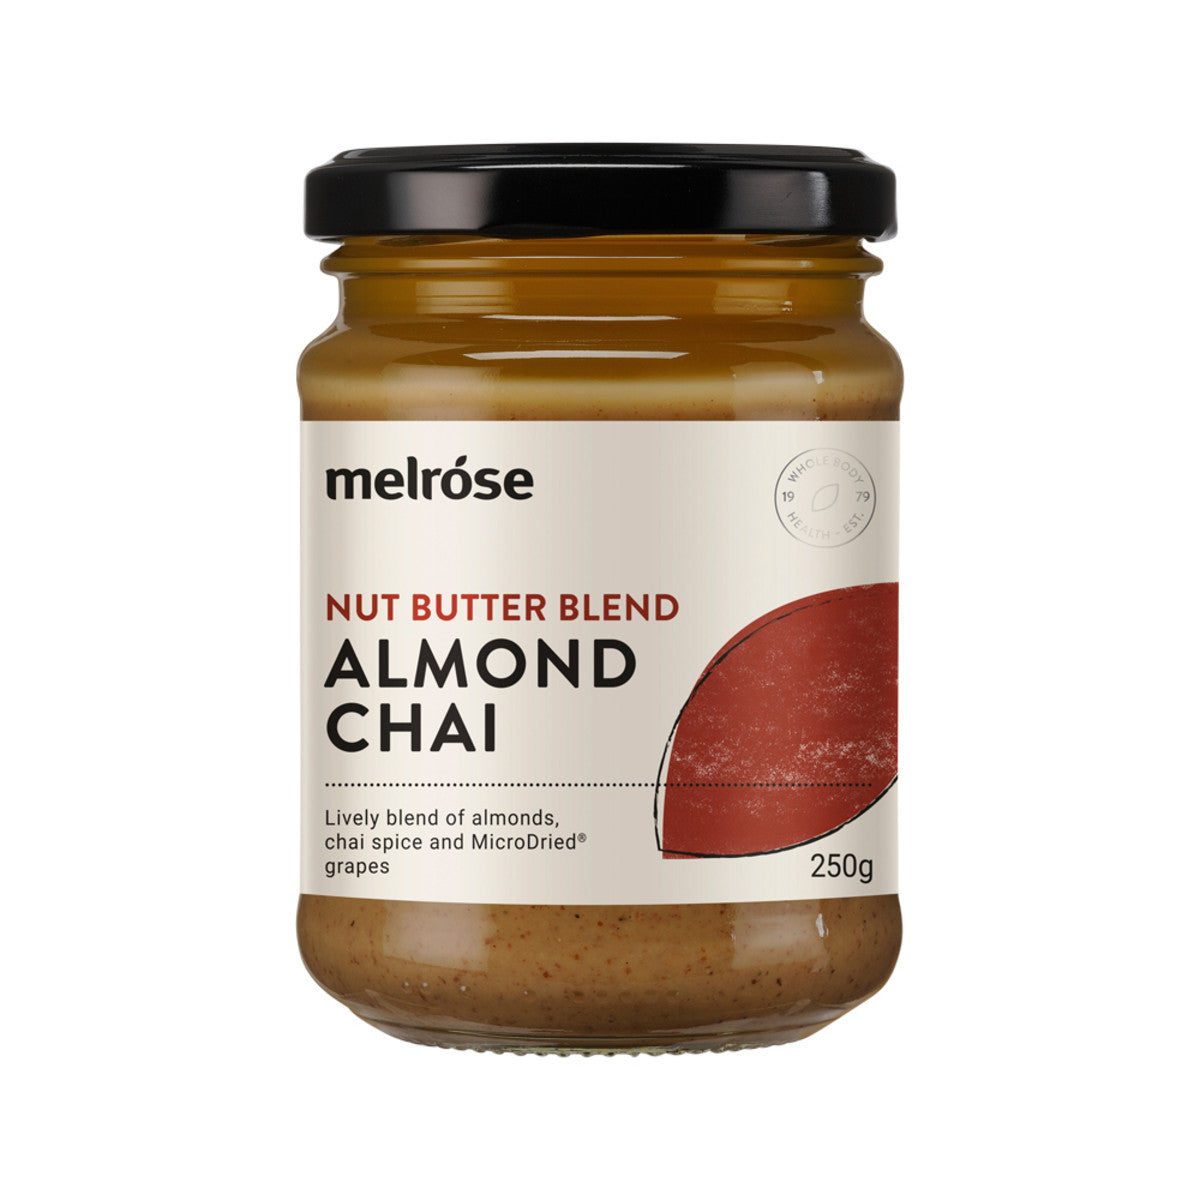 Melrose Nut Butter Blend Almond Chai 250g-The Living Co.